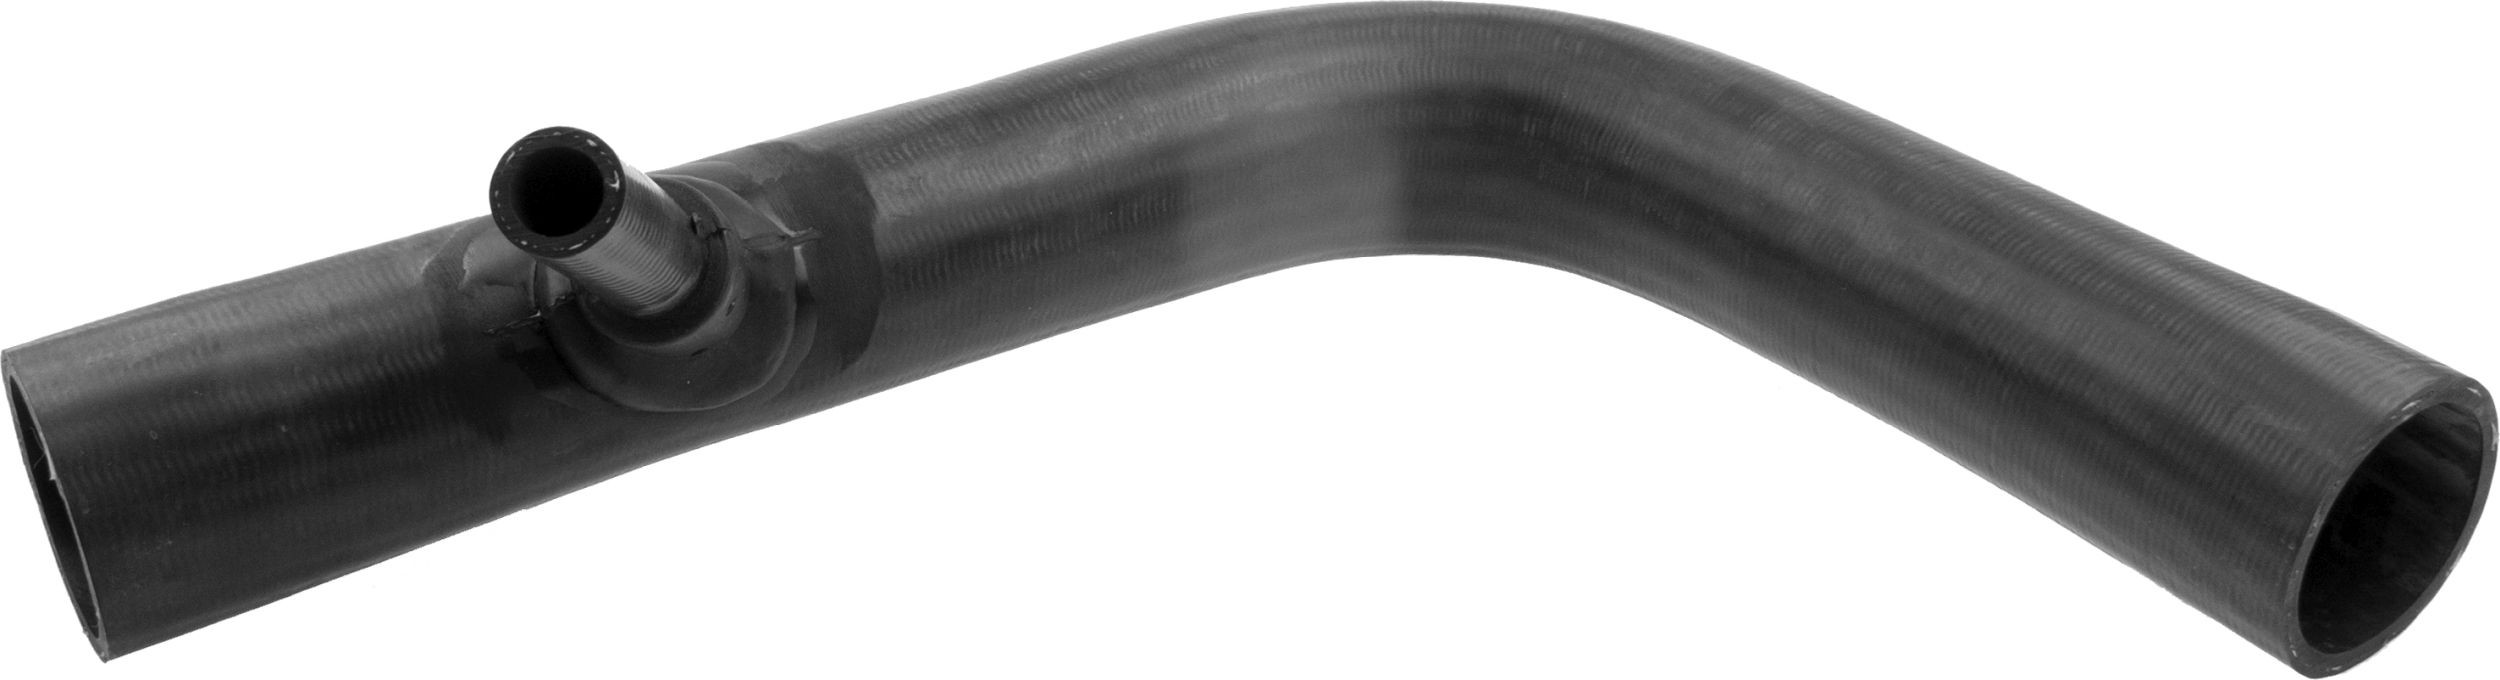 4275-53433 GATES EPDM (ethylene propylene diene Monomer (M-class) rubber) Hose Length: 616mm Coolant Hose 05-3433 buy